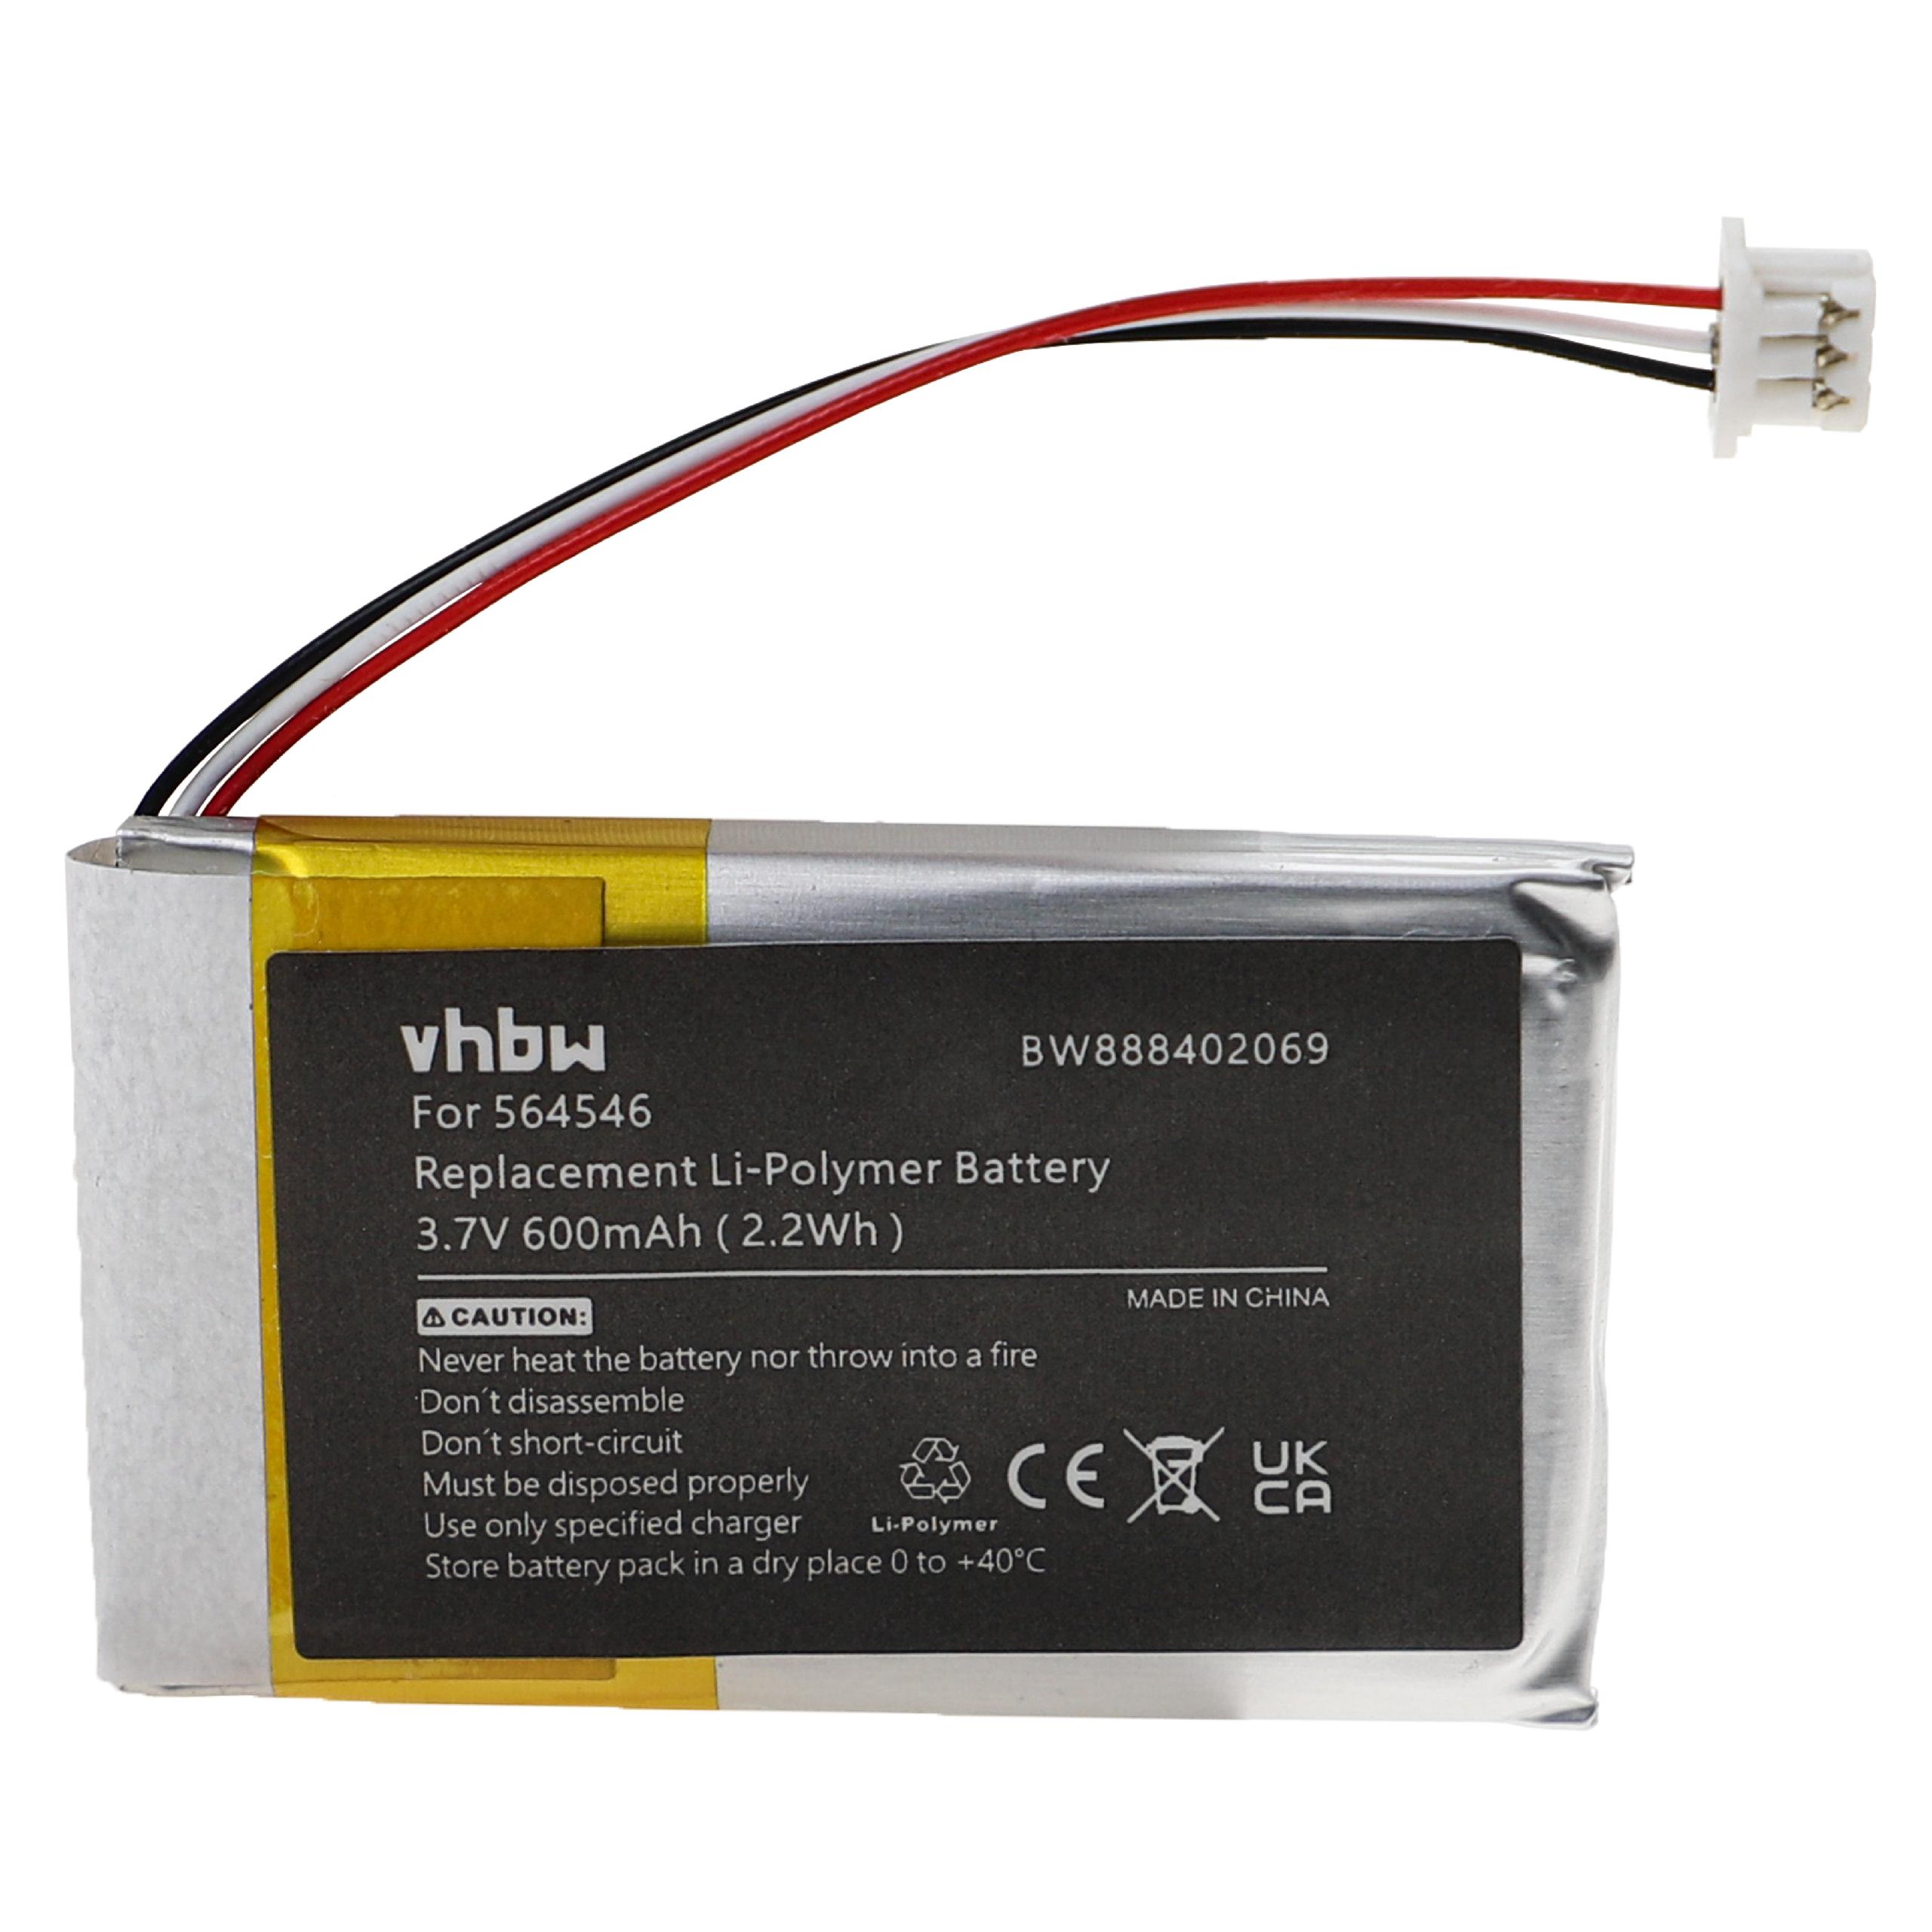 Wireless Headset Battery Replacement for Sennheiser 564546, AHB622540N1 - 600mAh 3.7V Li-polymer